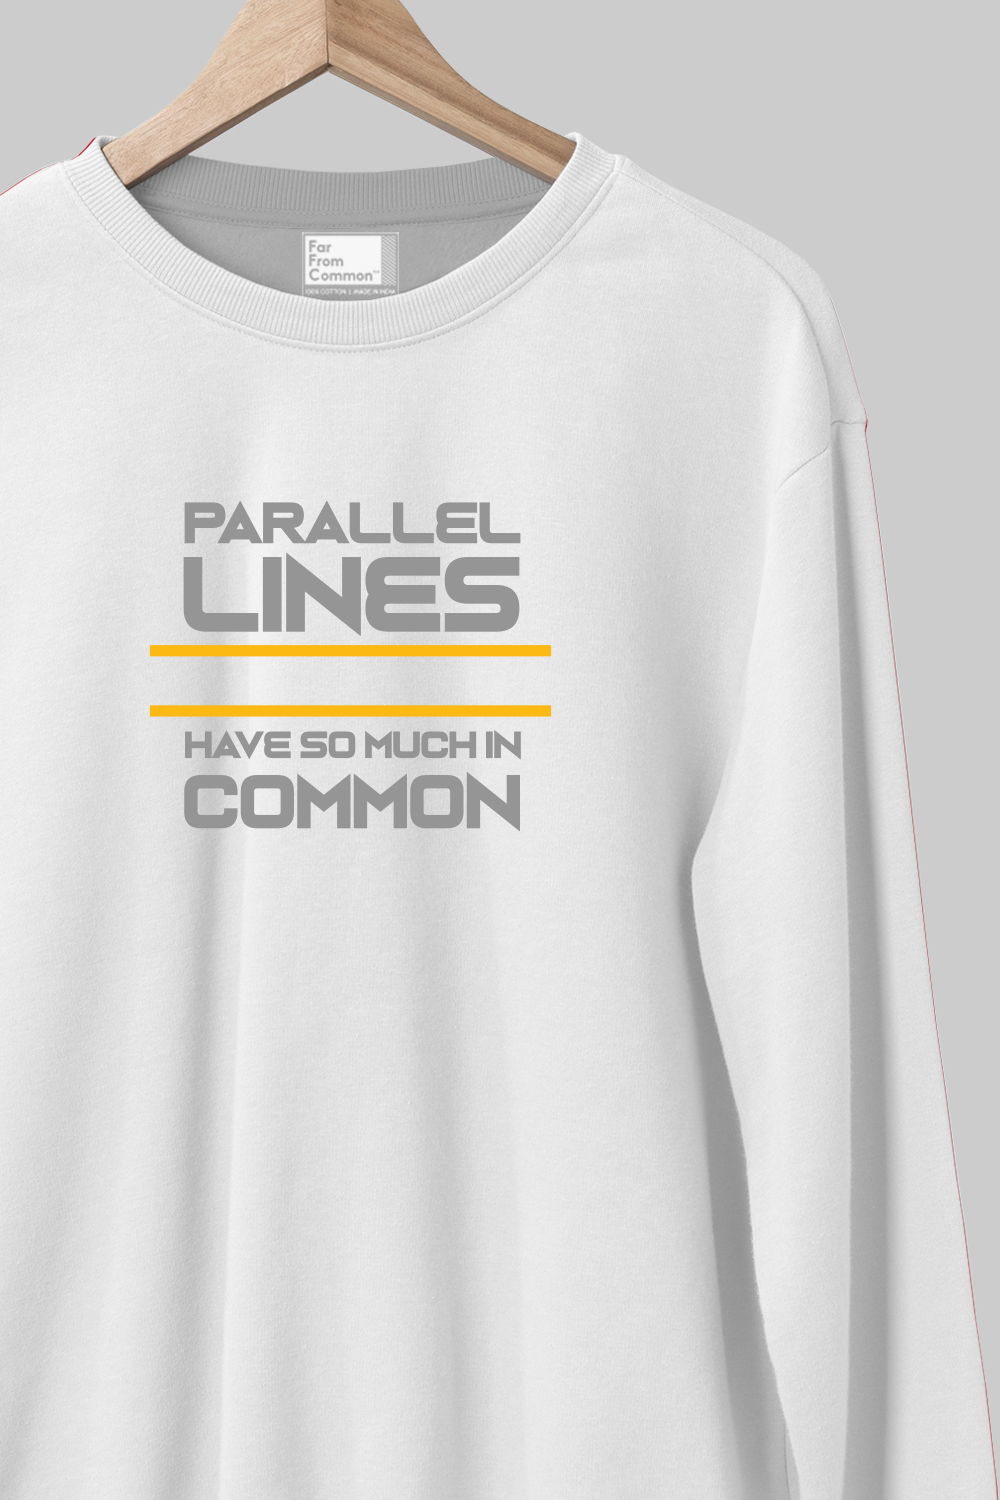 Parallel Lines White Sweatshirt